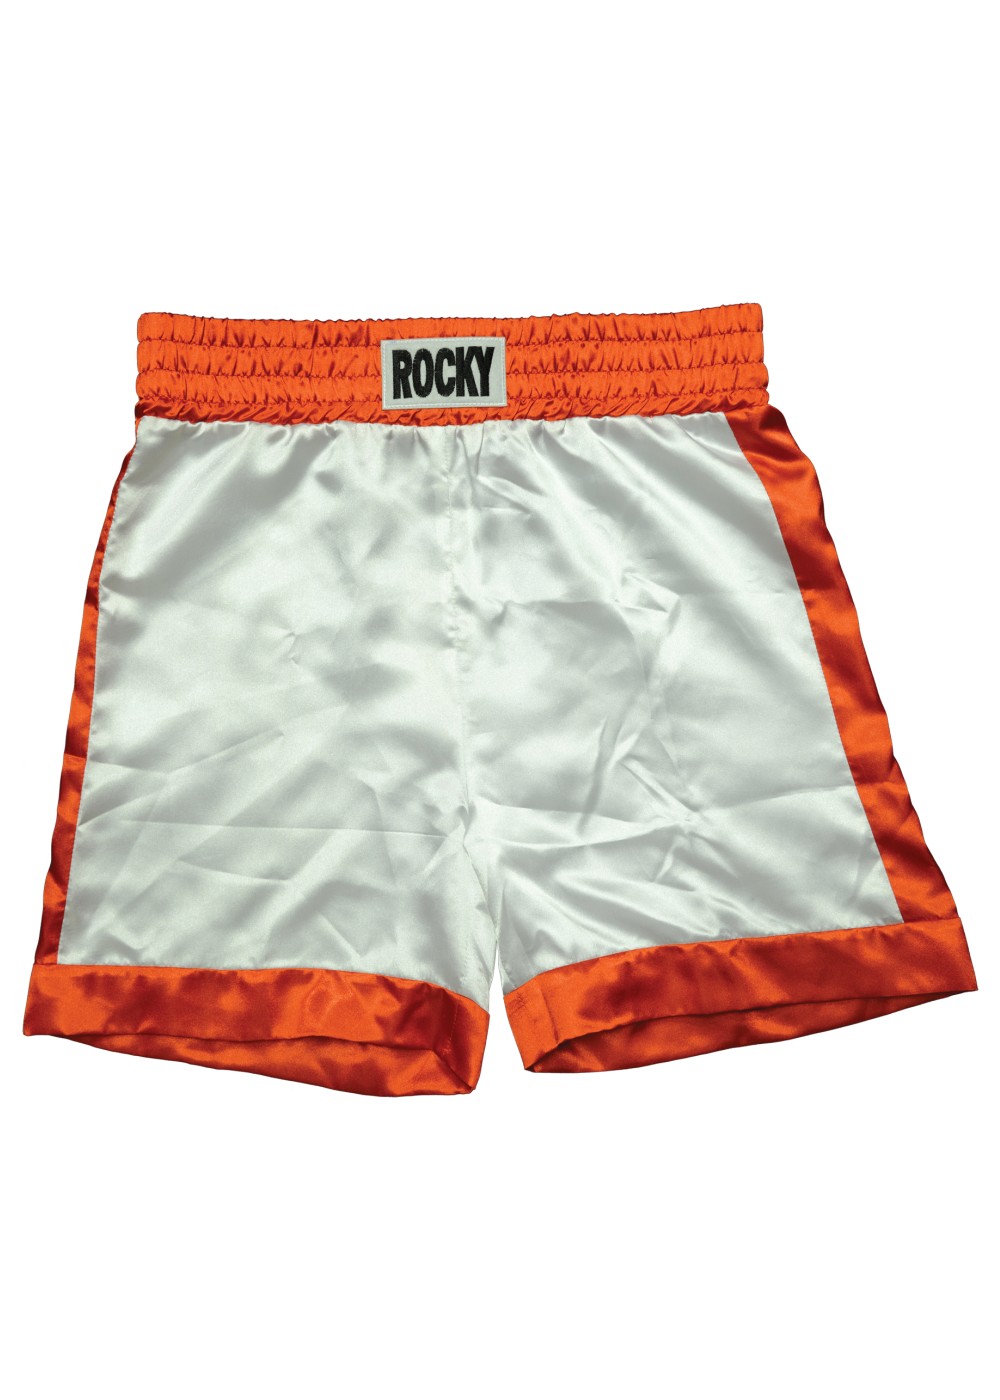 Rocky Balboa Boxing Trunks Costume